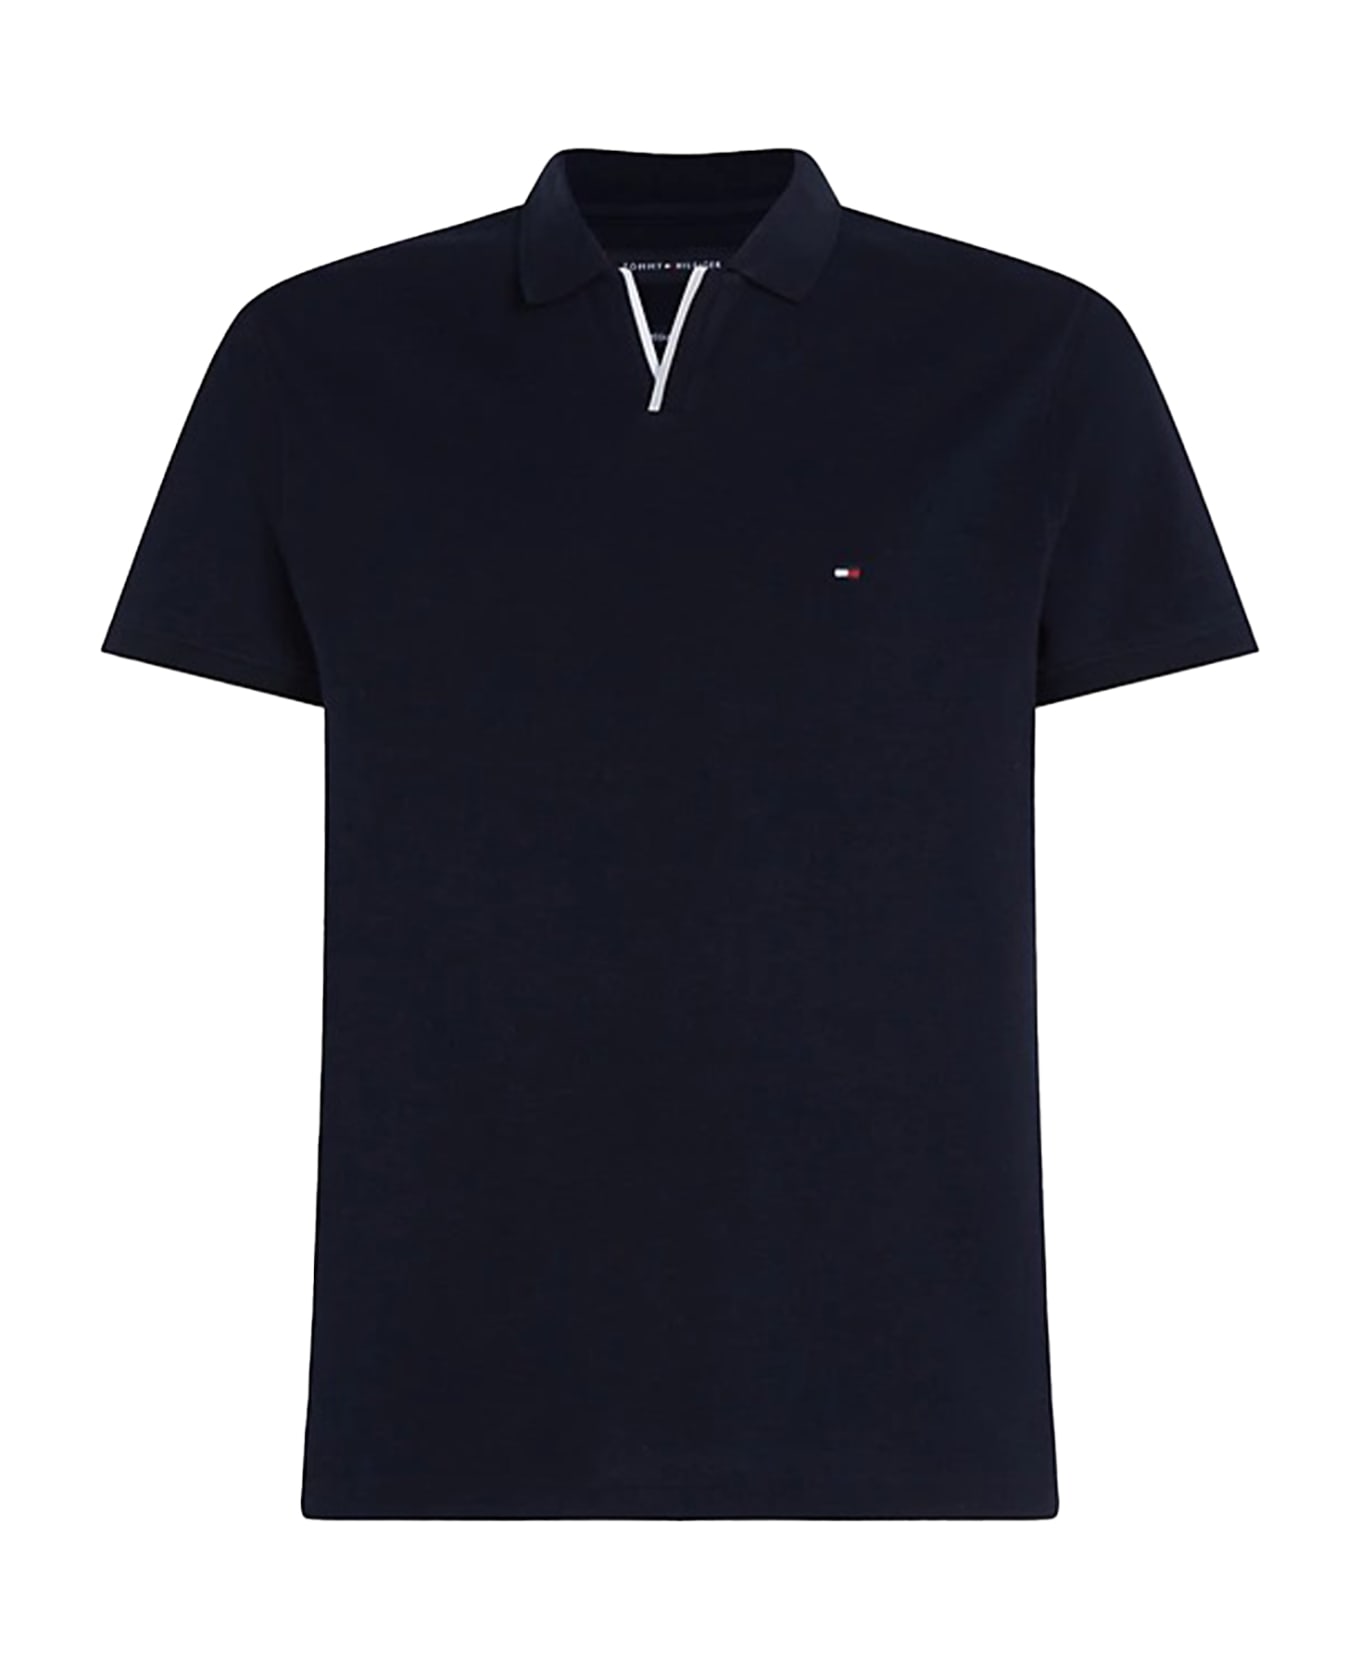 Tommy Hilfiger Navy Blue Regular Fit Polo Shirt - DESERT SKY